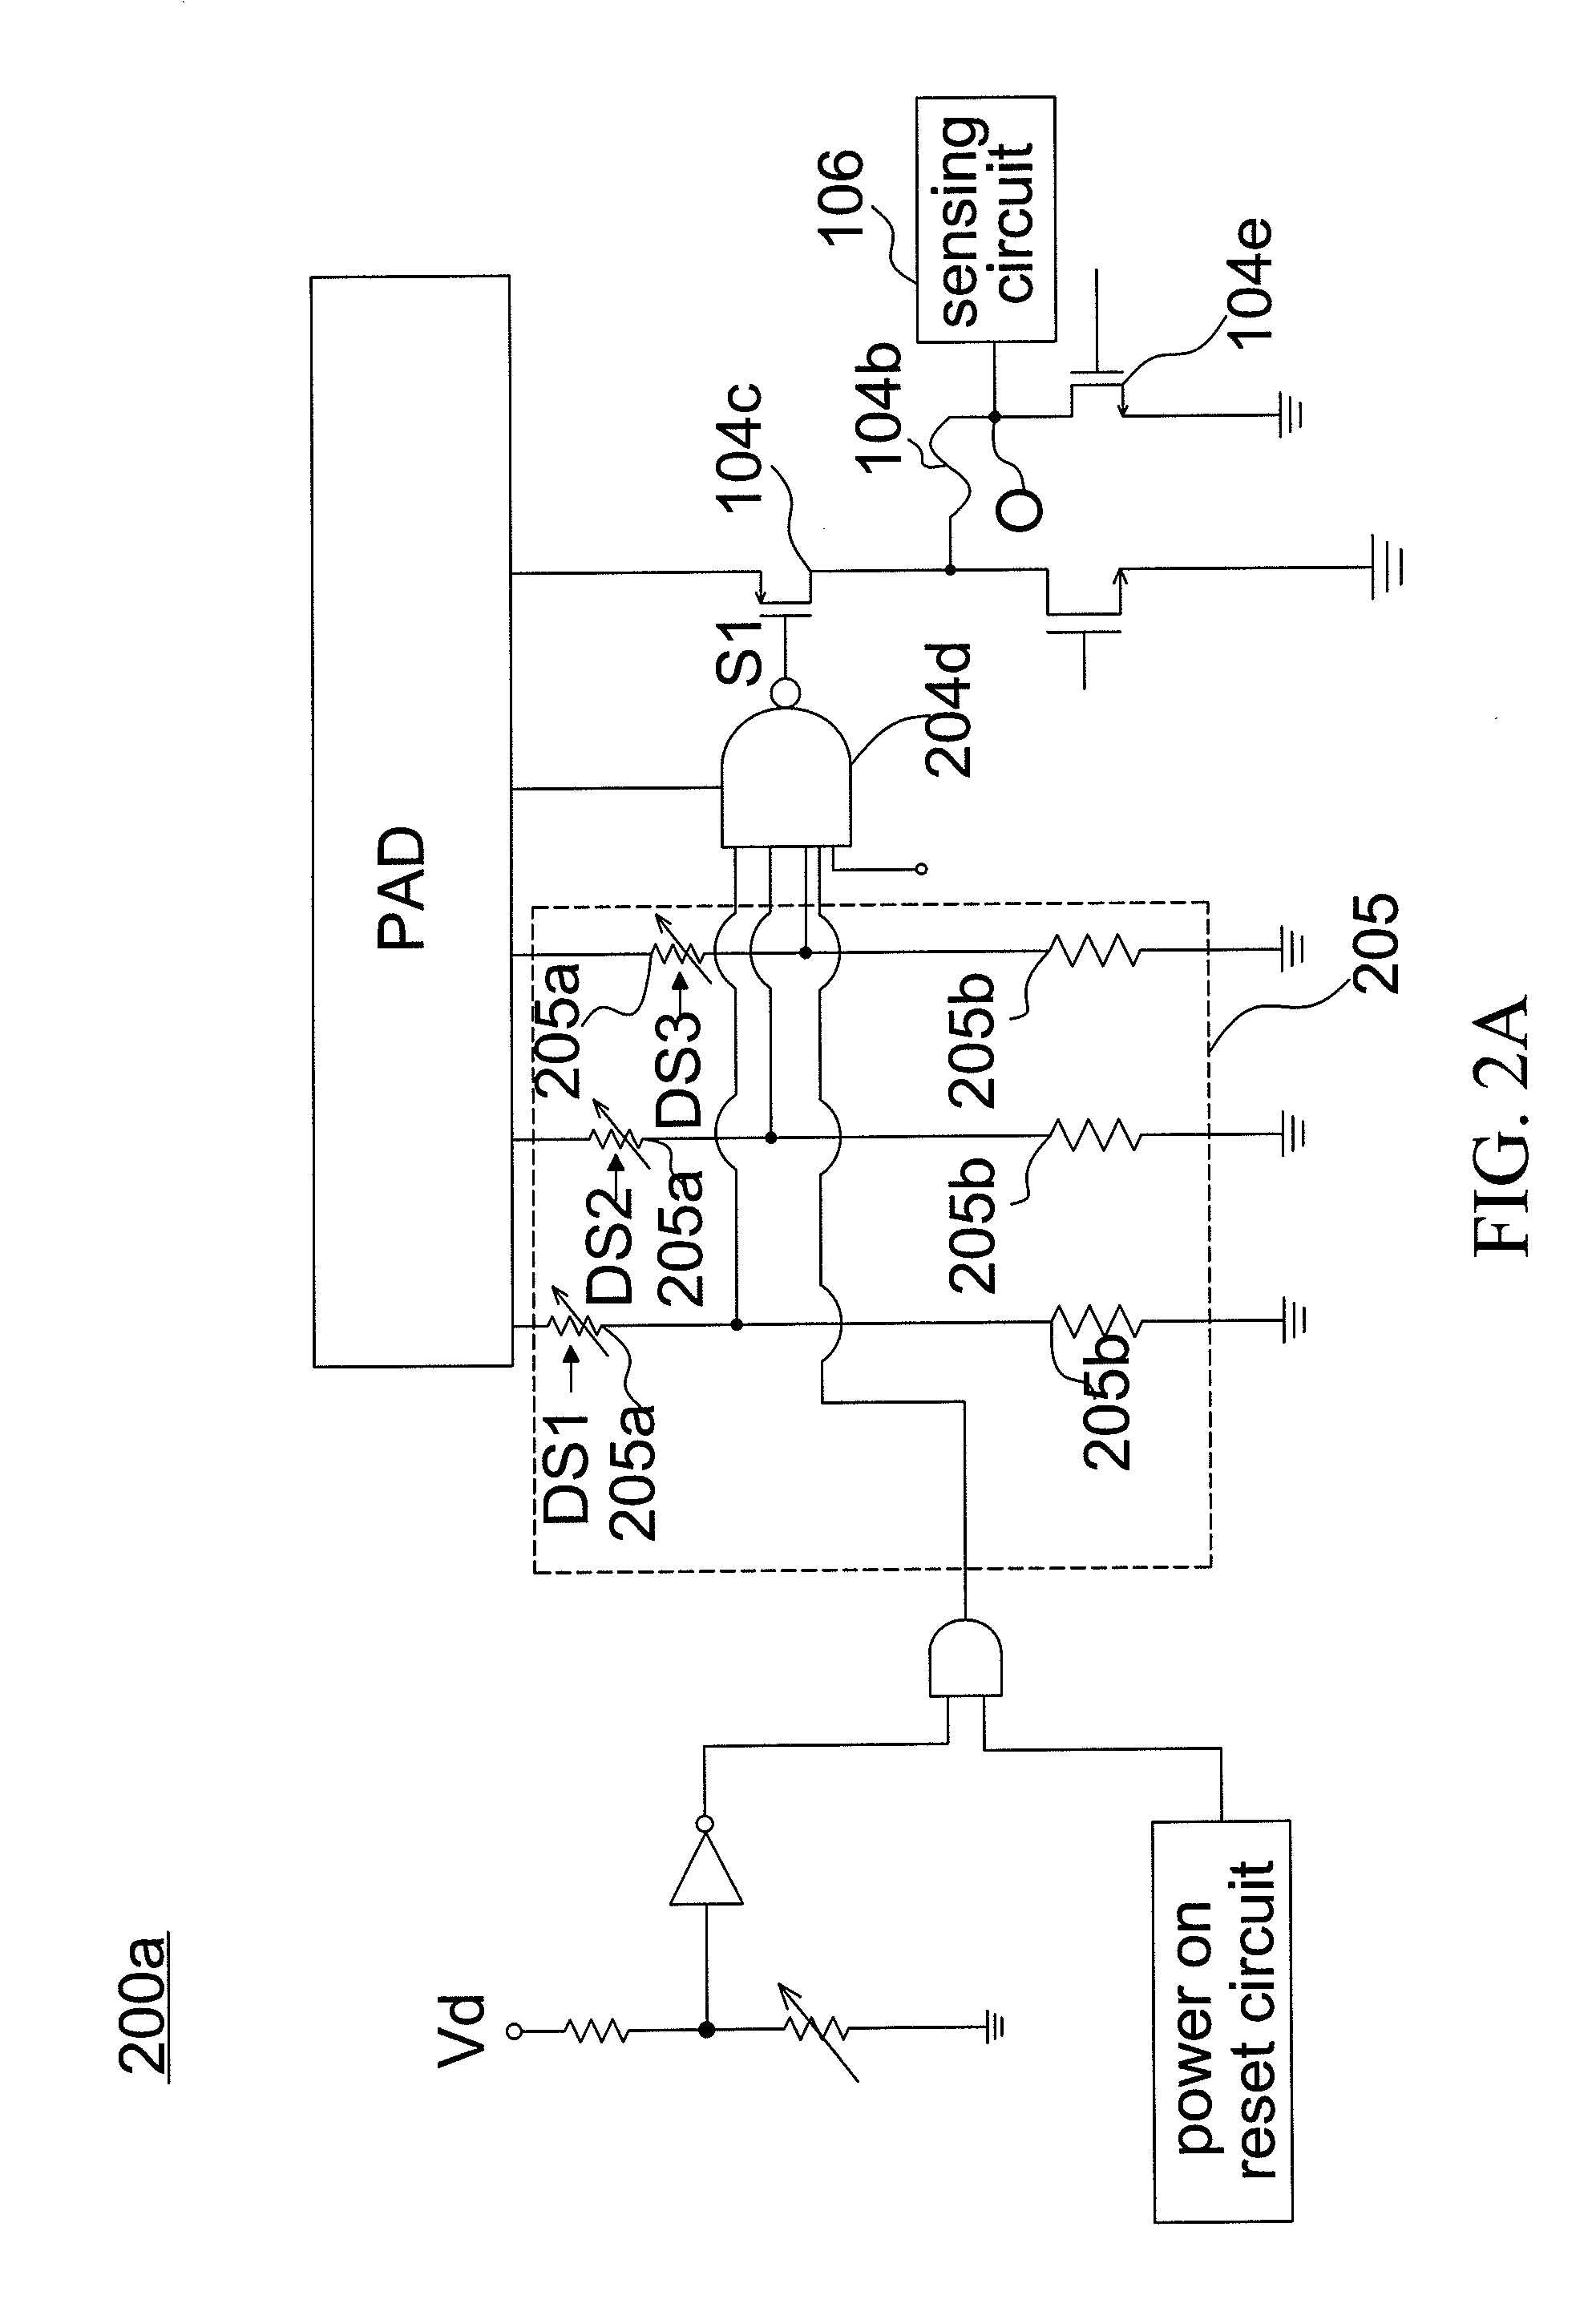 Voltage operation system